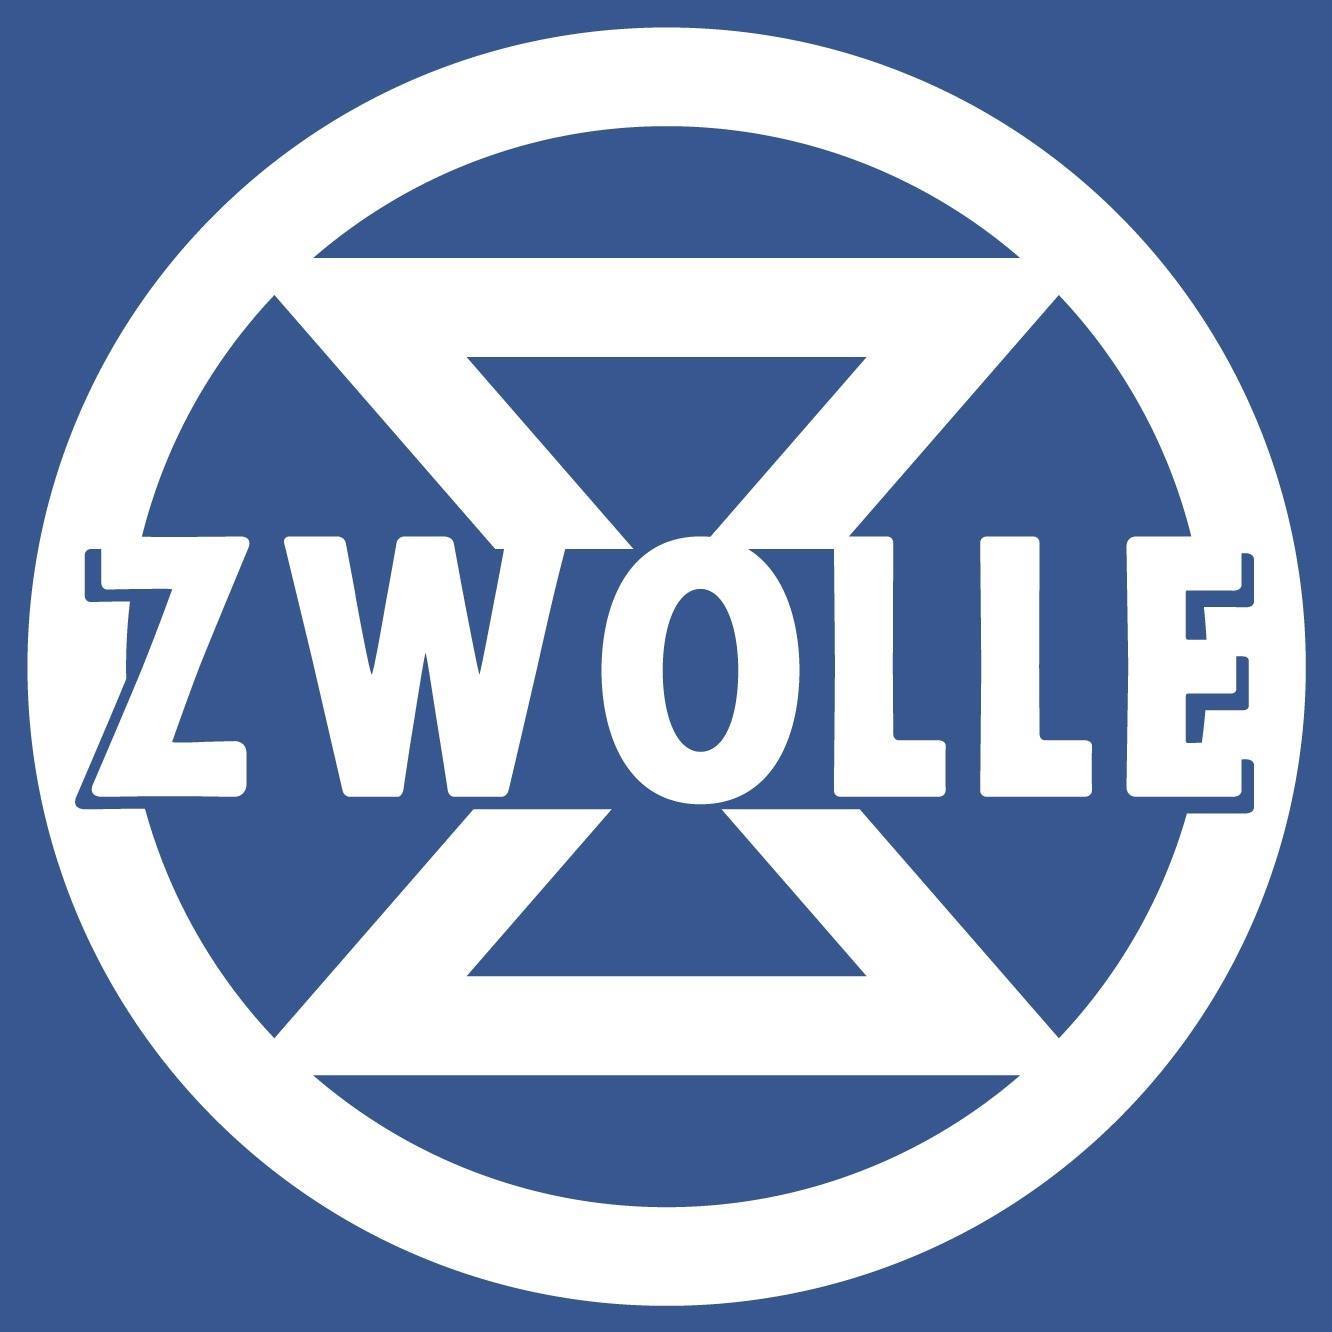 Extinction Rebellion Zwolle logo